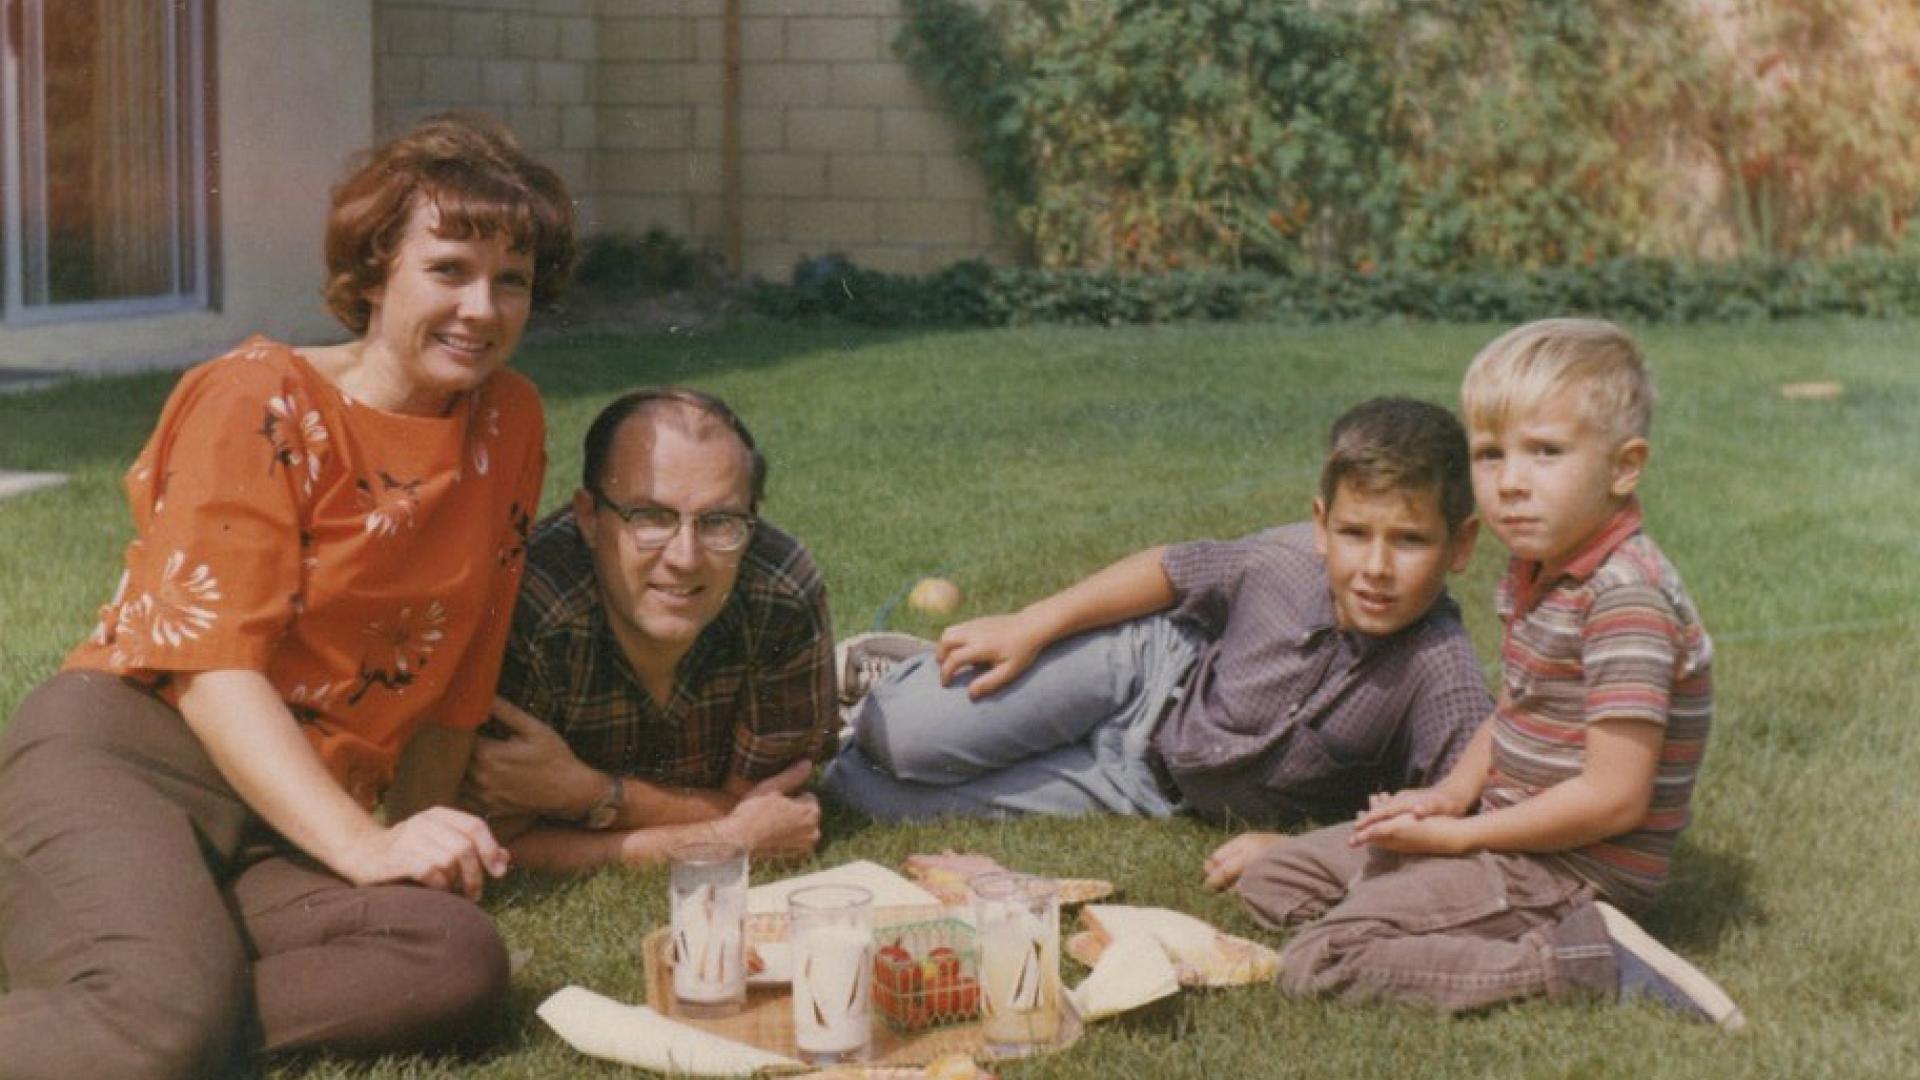 David Carlberg with his family